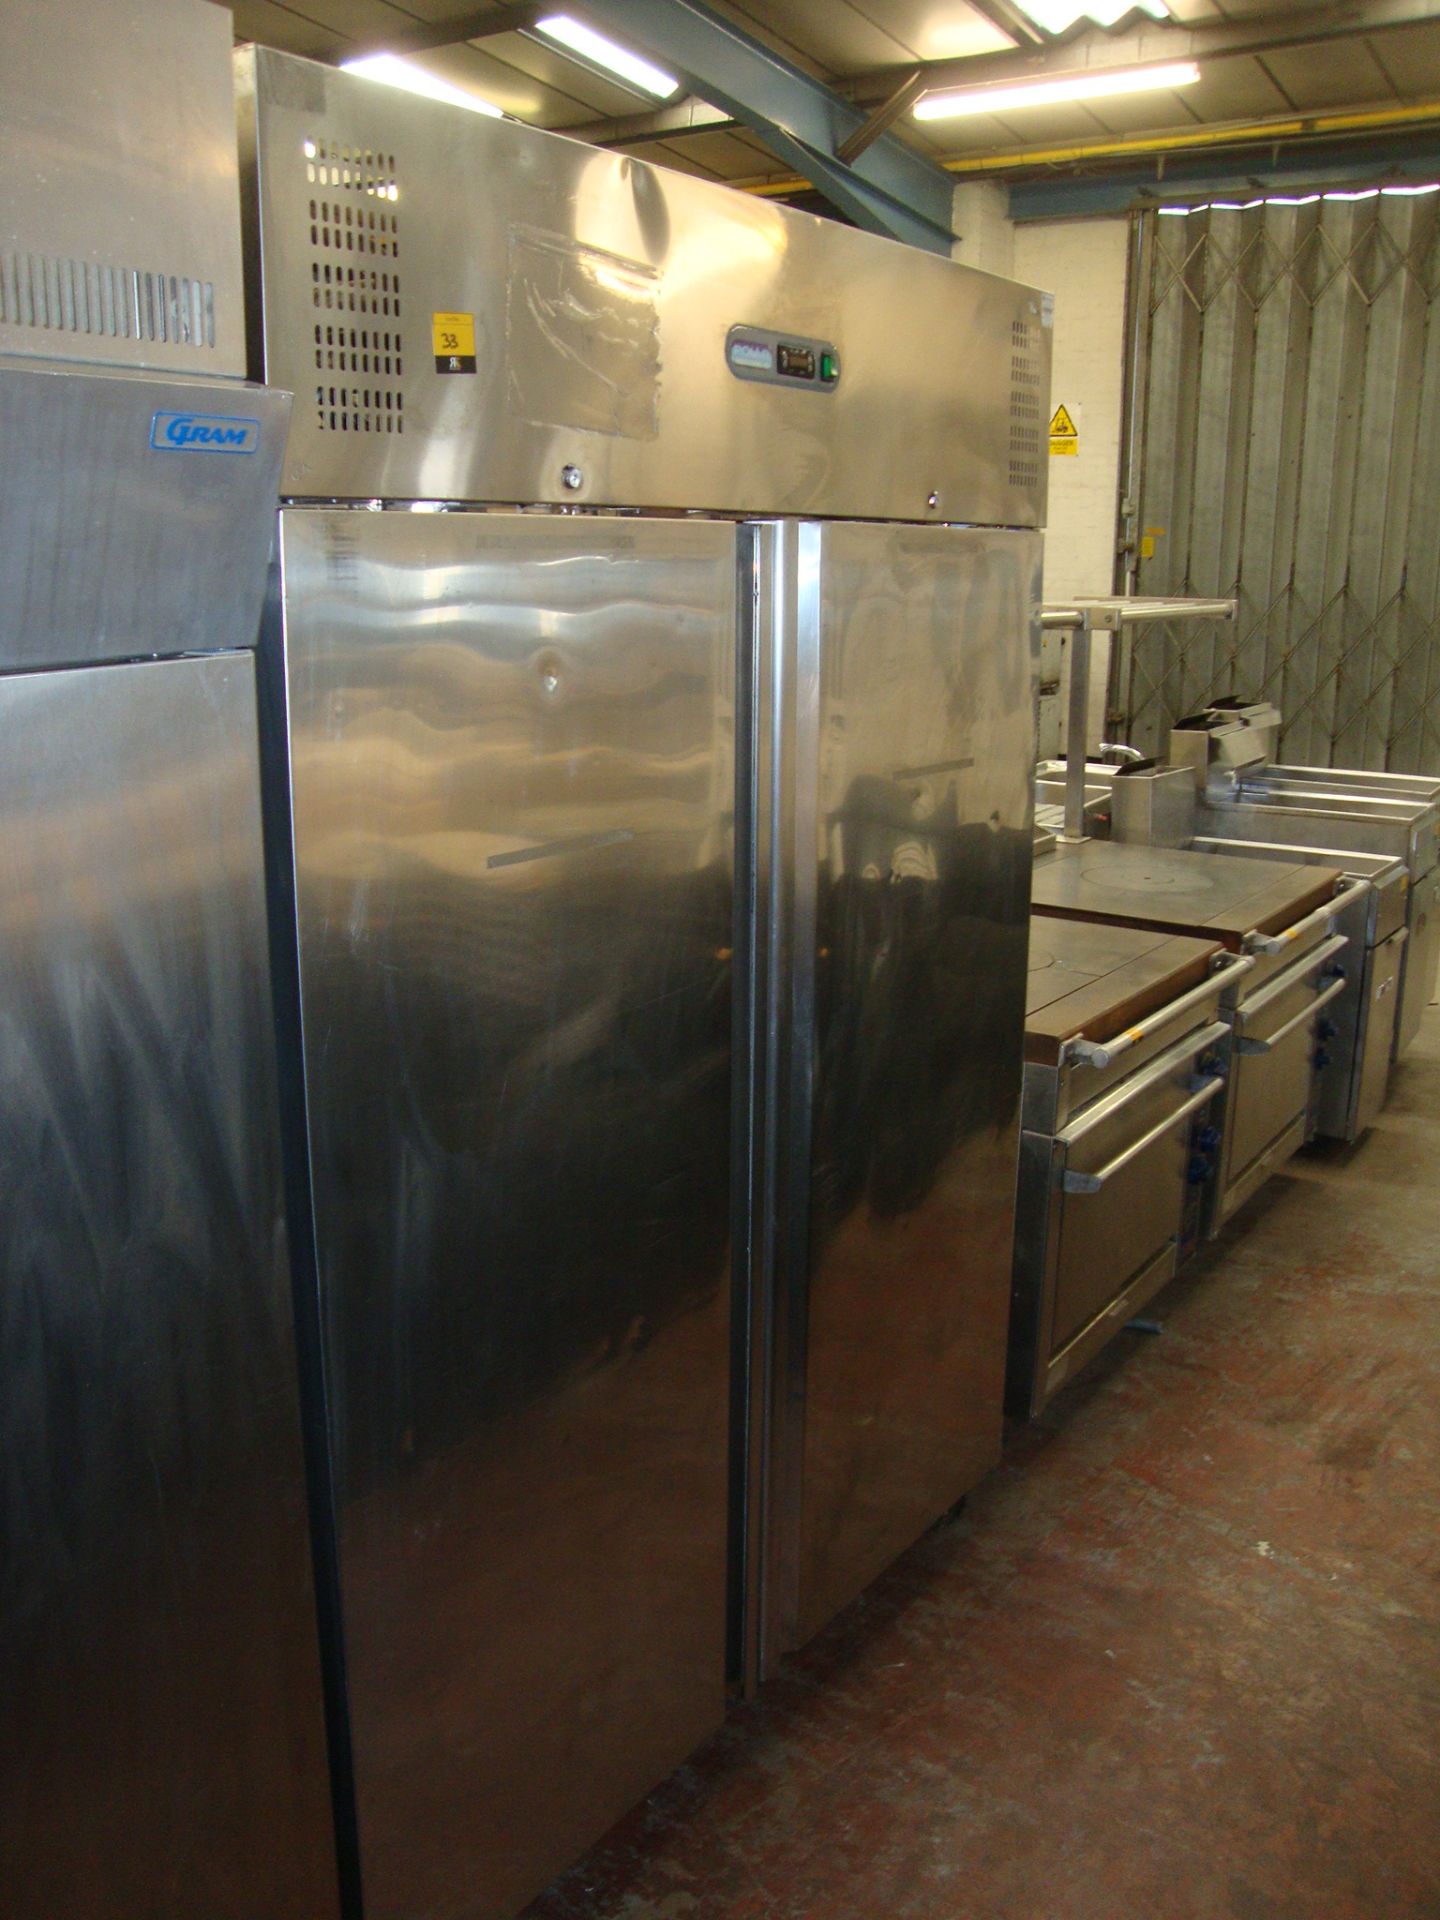 Polar U635 refrigeration mobile large stainless steel twin door freezer - Image 2 of 4